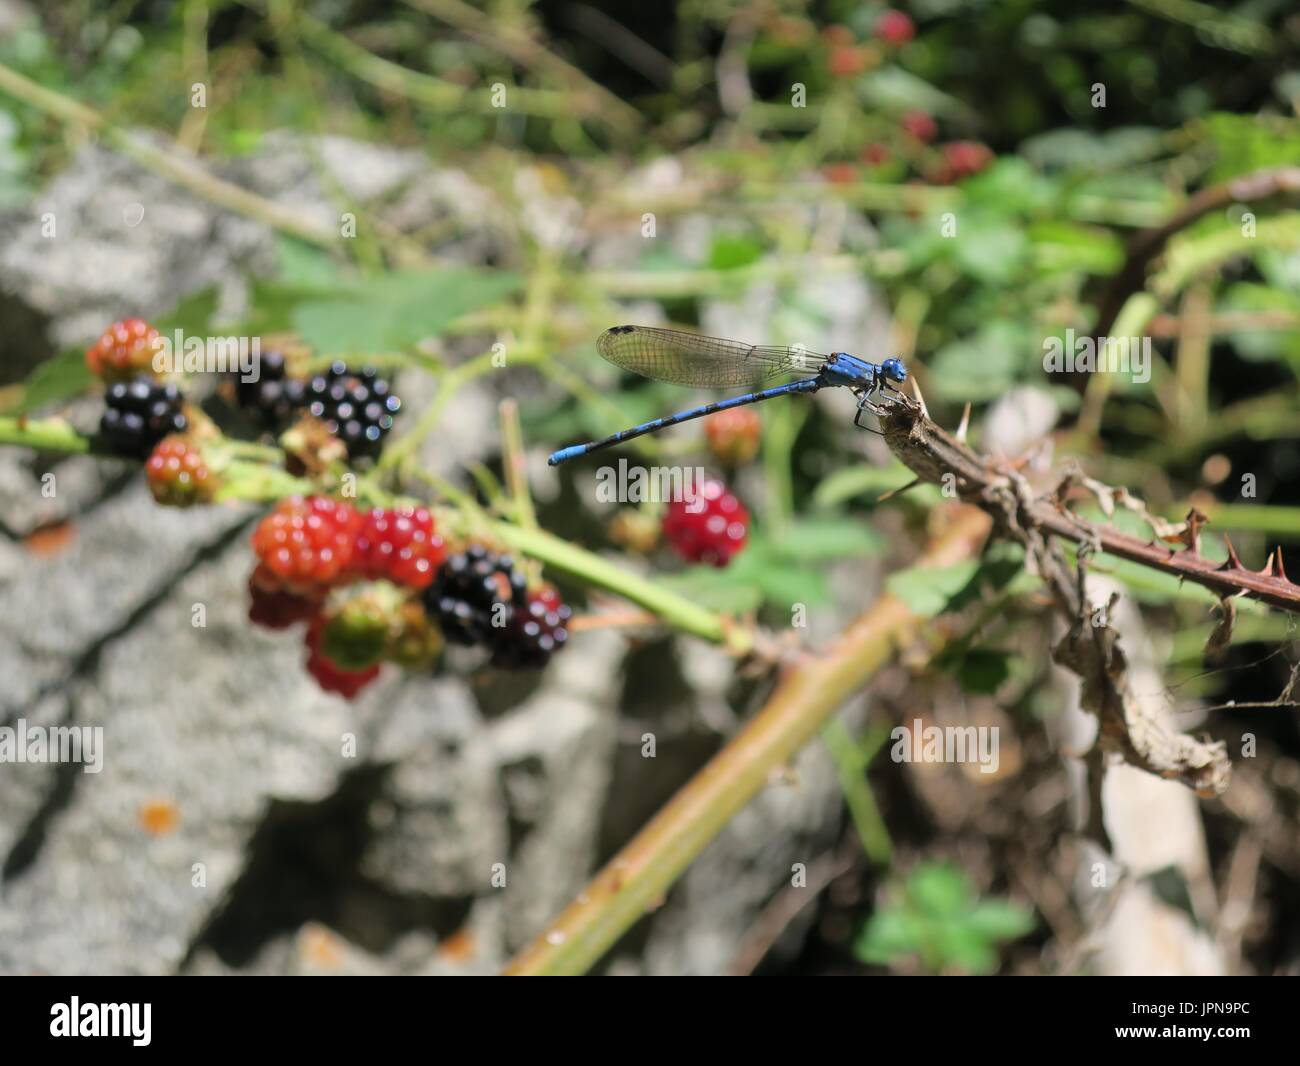 Blue dragonfly on blackberry brambles, Three rivers, California, United States Stock Photo